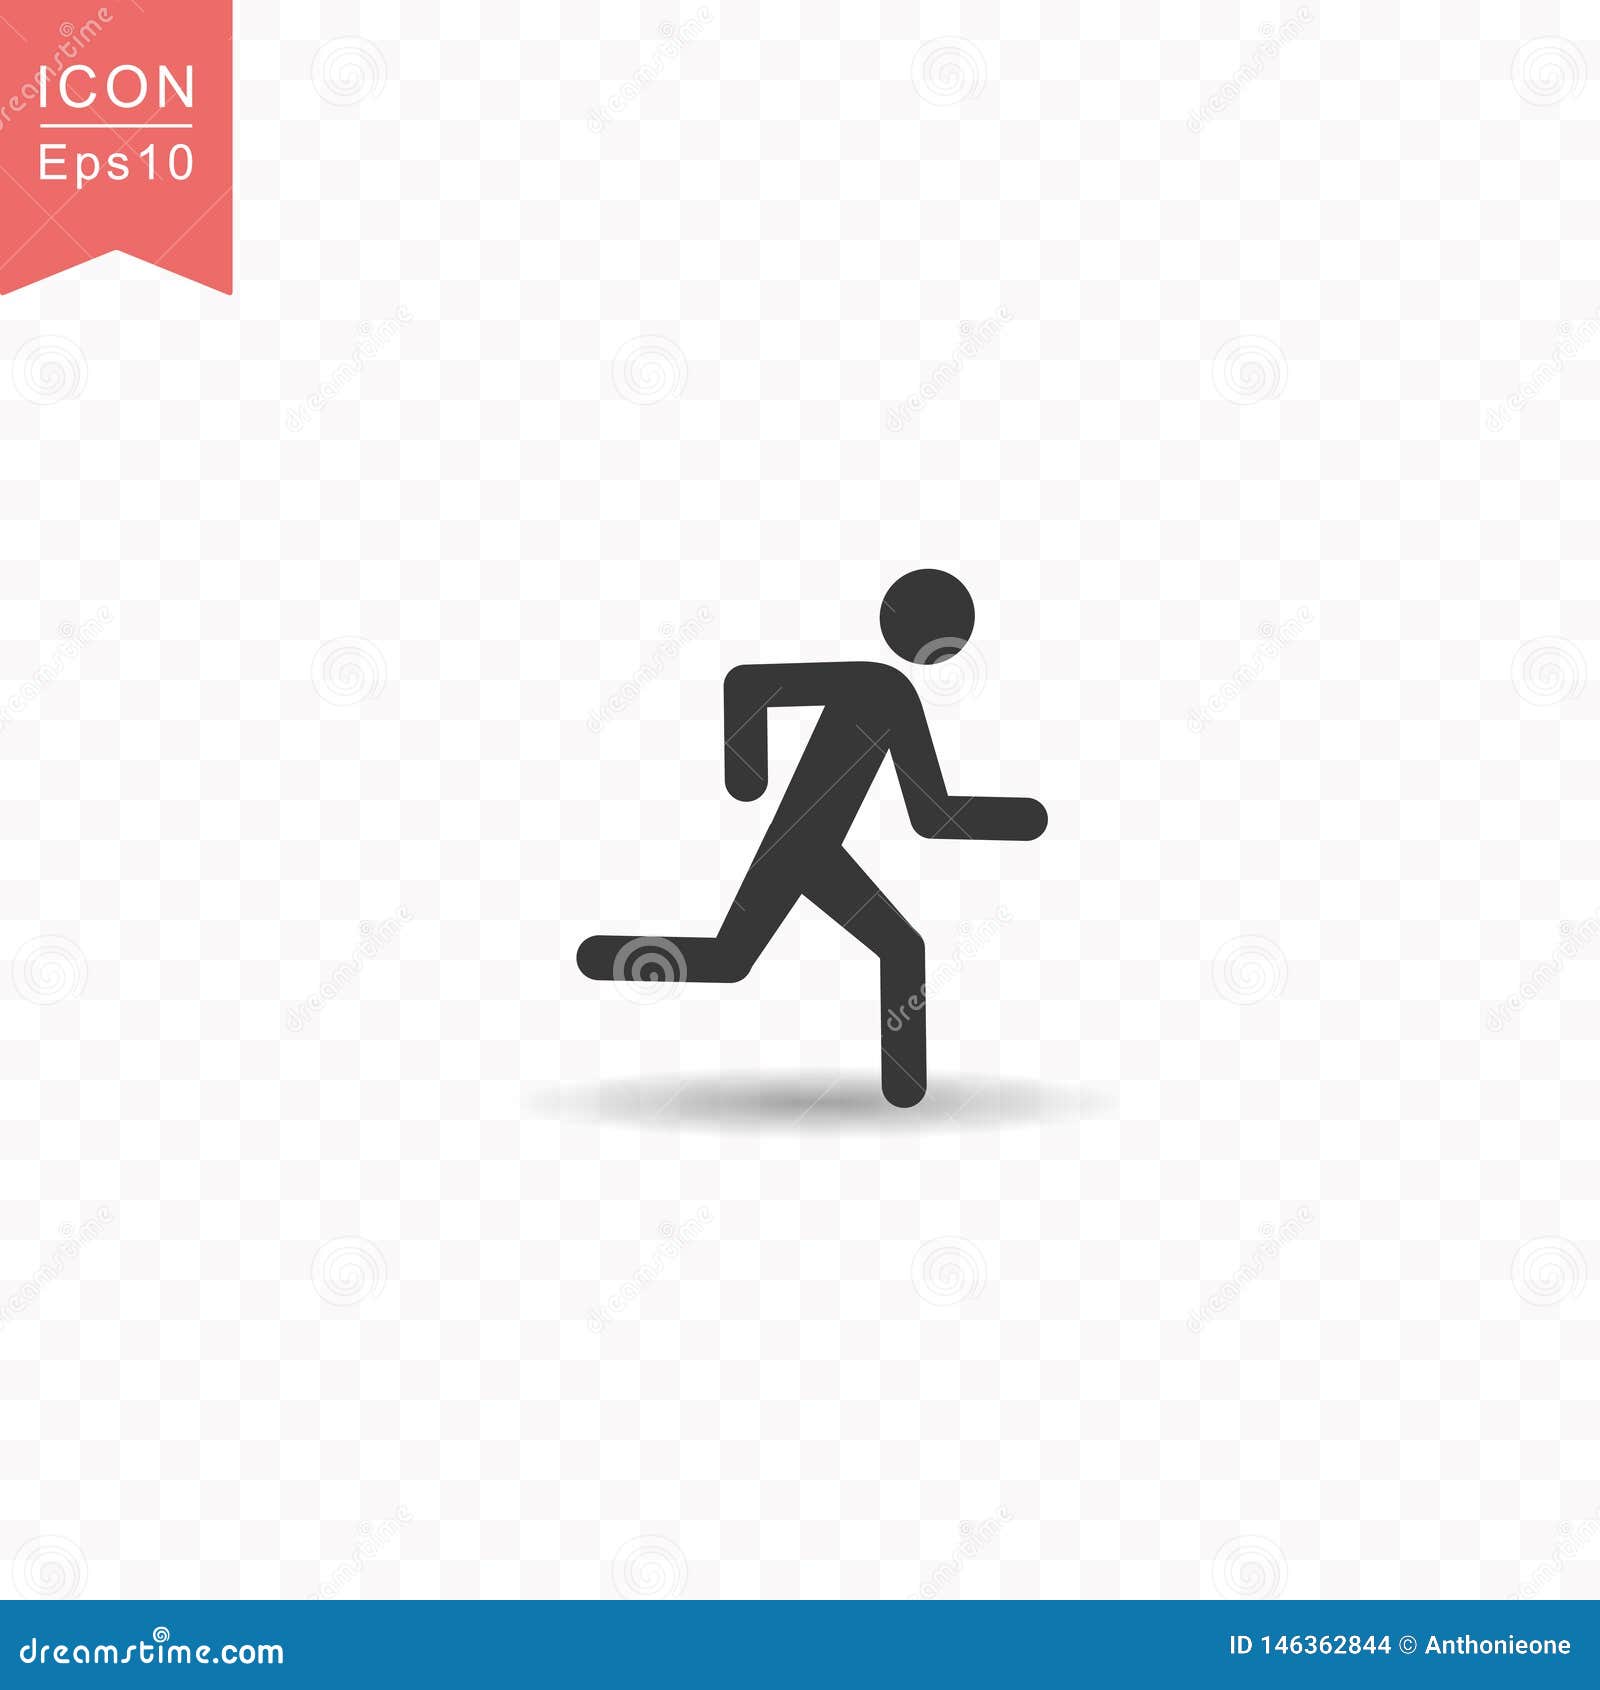 People figures in motion running walking Vector Image